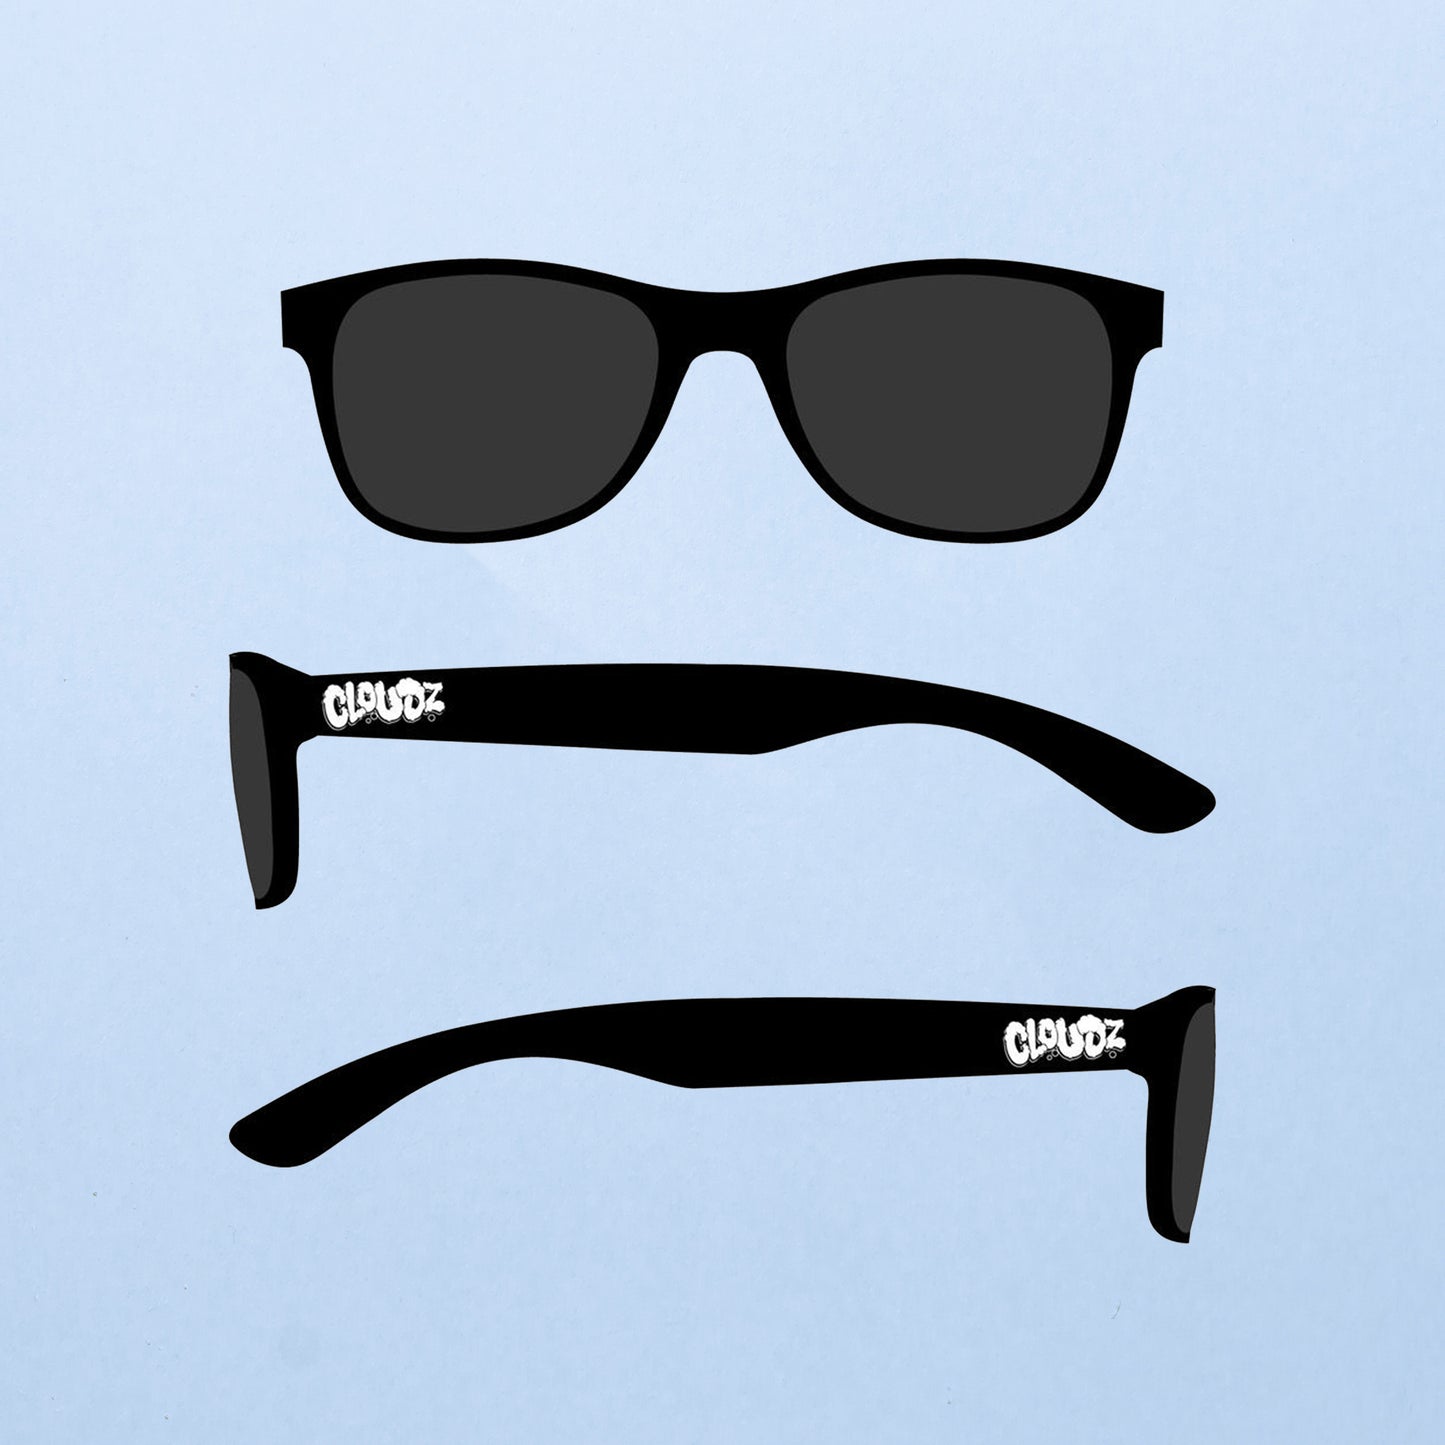 Cloudz Sunglasses